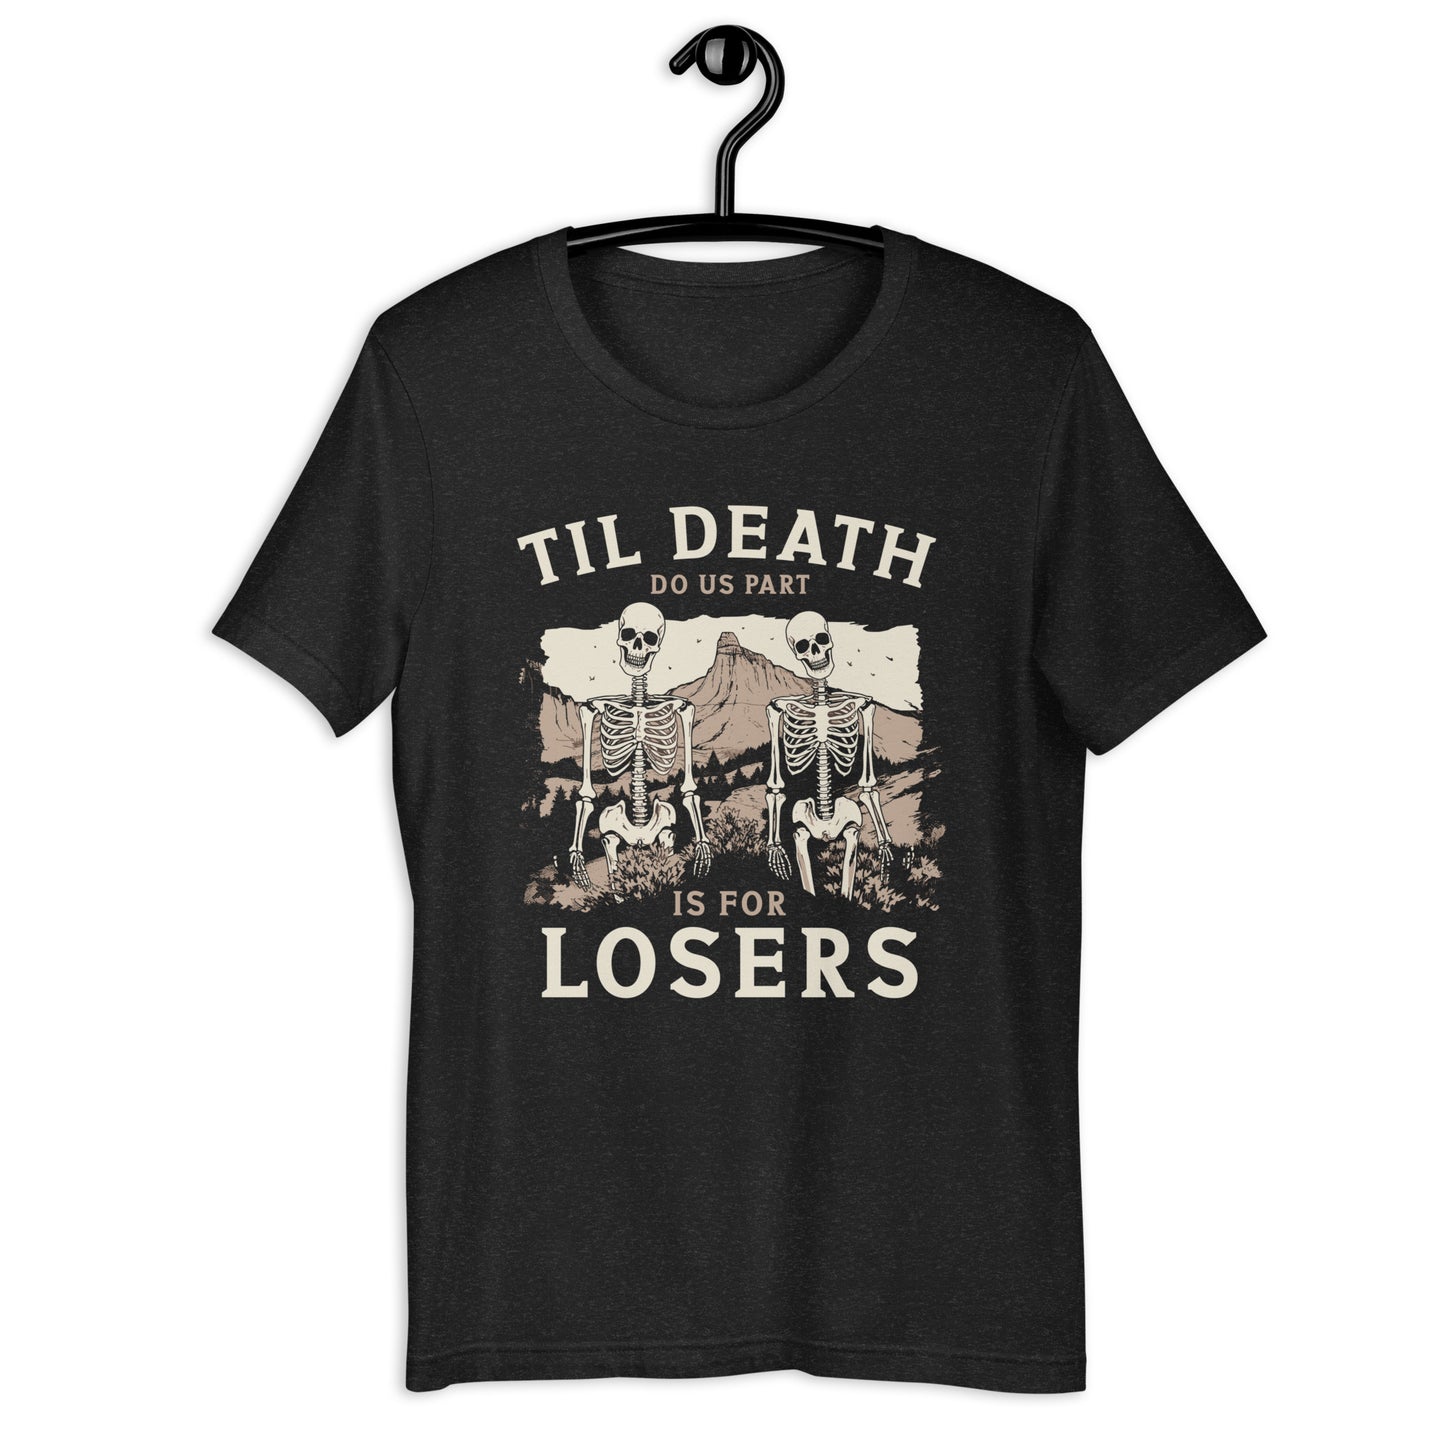 Till Death Do Us Part Is For Losers Cotton Black Unisex T-Shirt